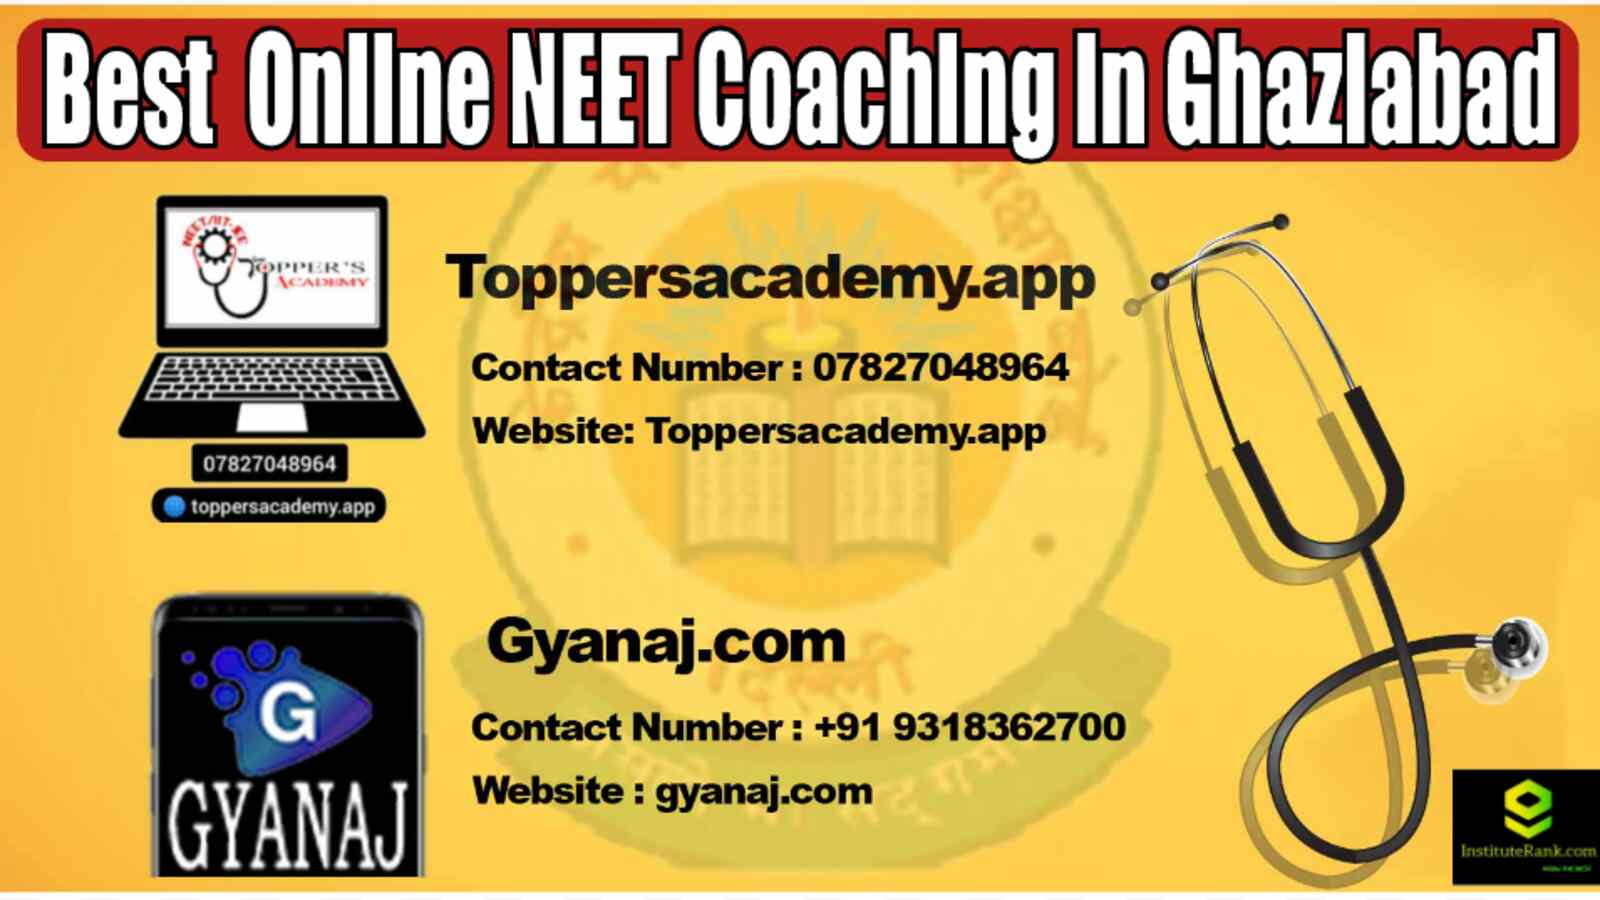 Best Online NEET Coaching in Ghaziabad 2022